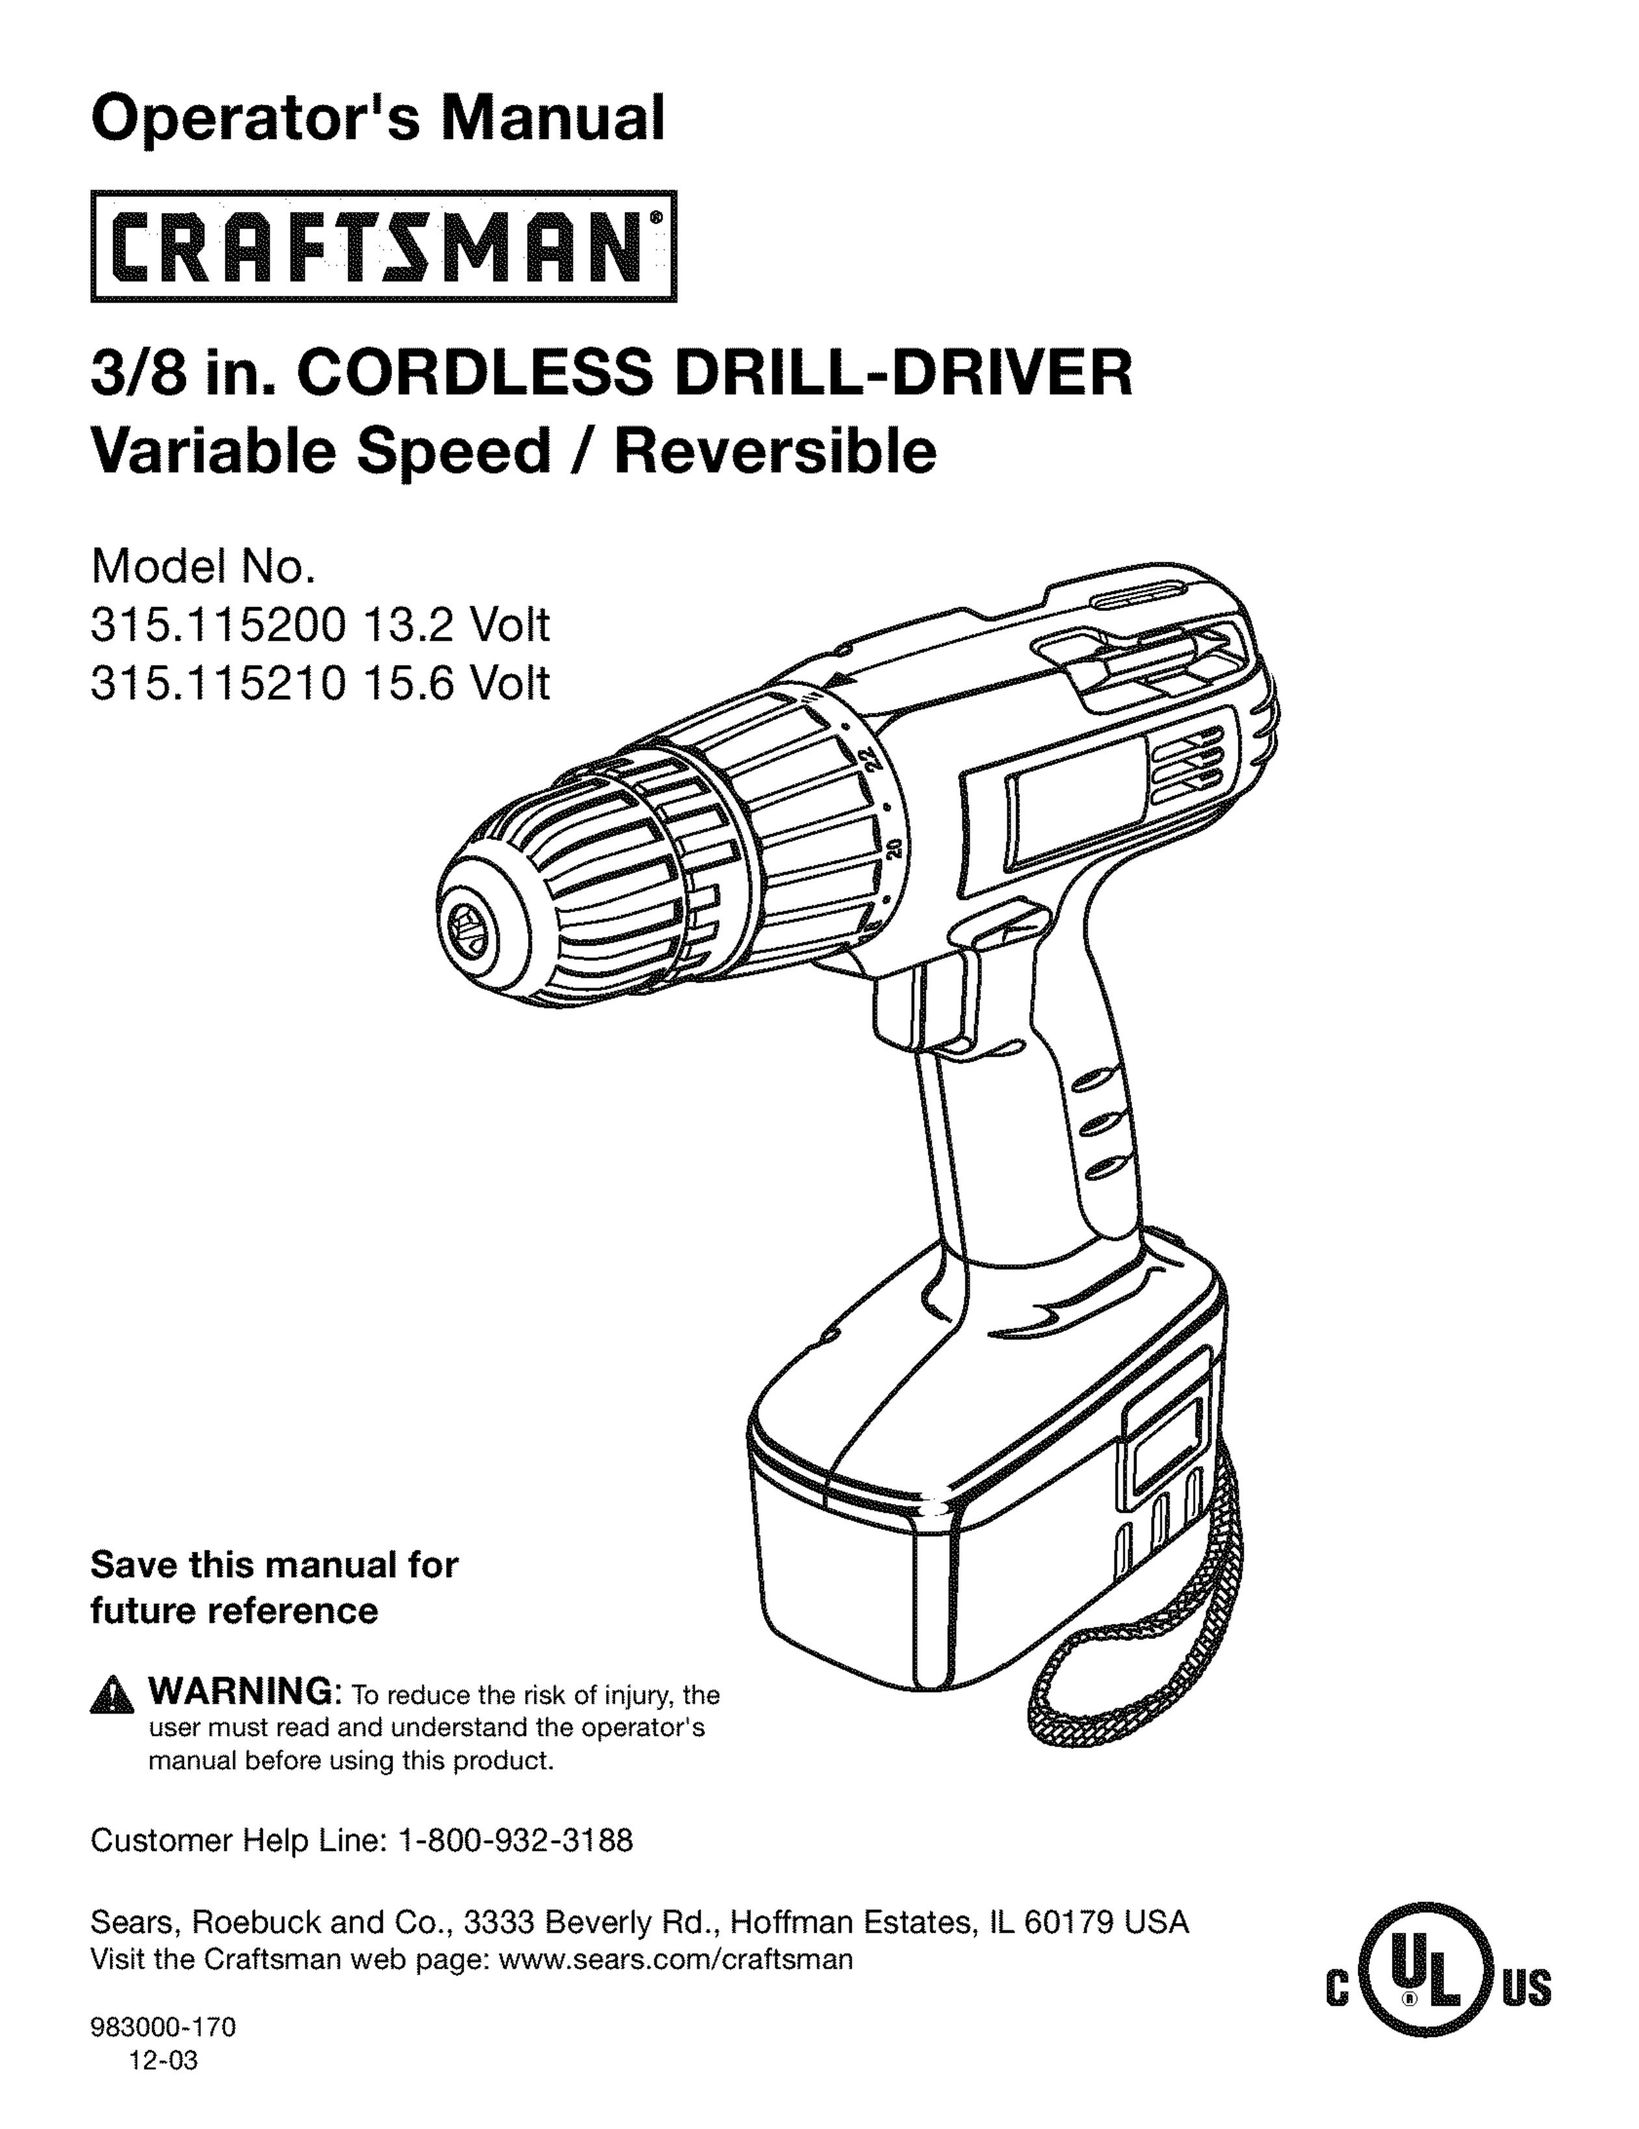 Craftsman 315.11521 Cordless Drill User Manual